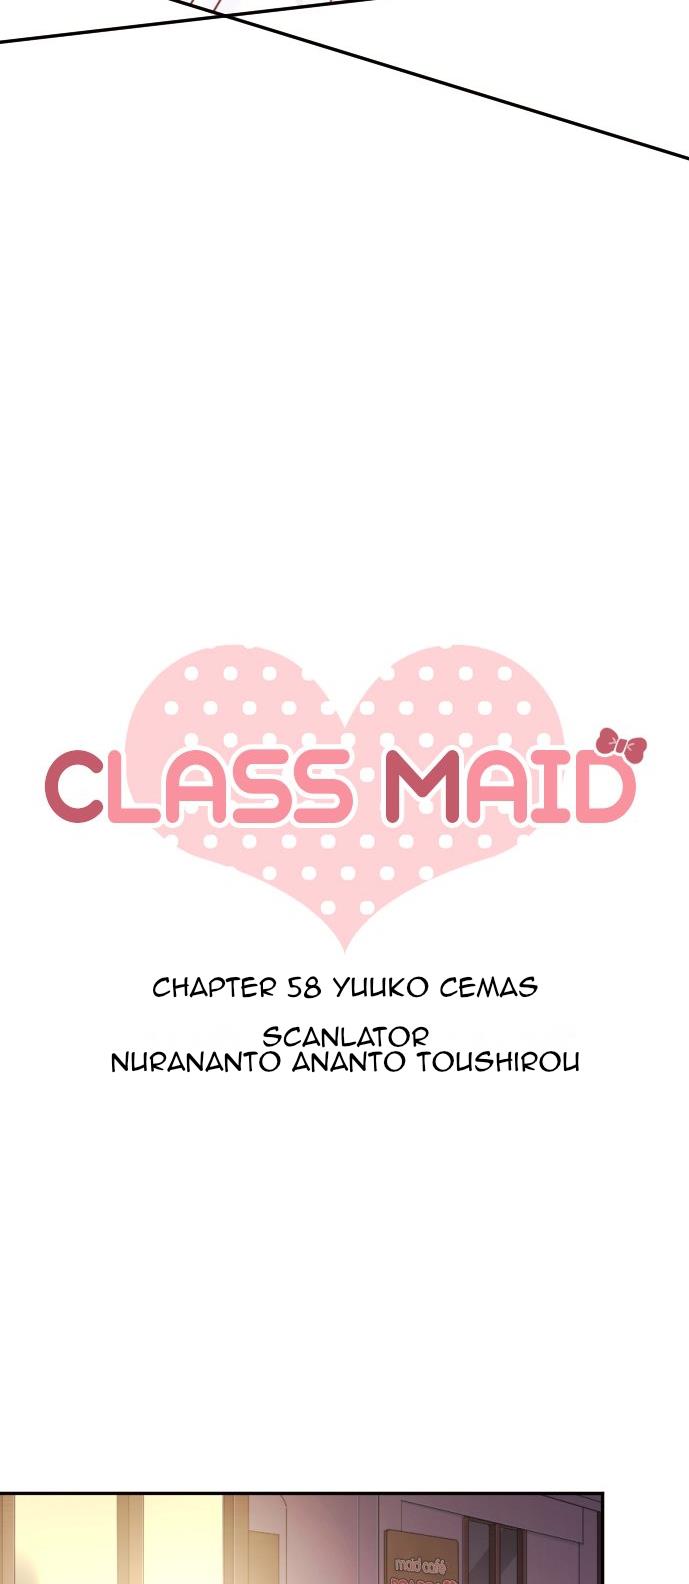 Class Maid (Shimamura) Chapter 59